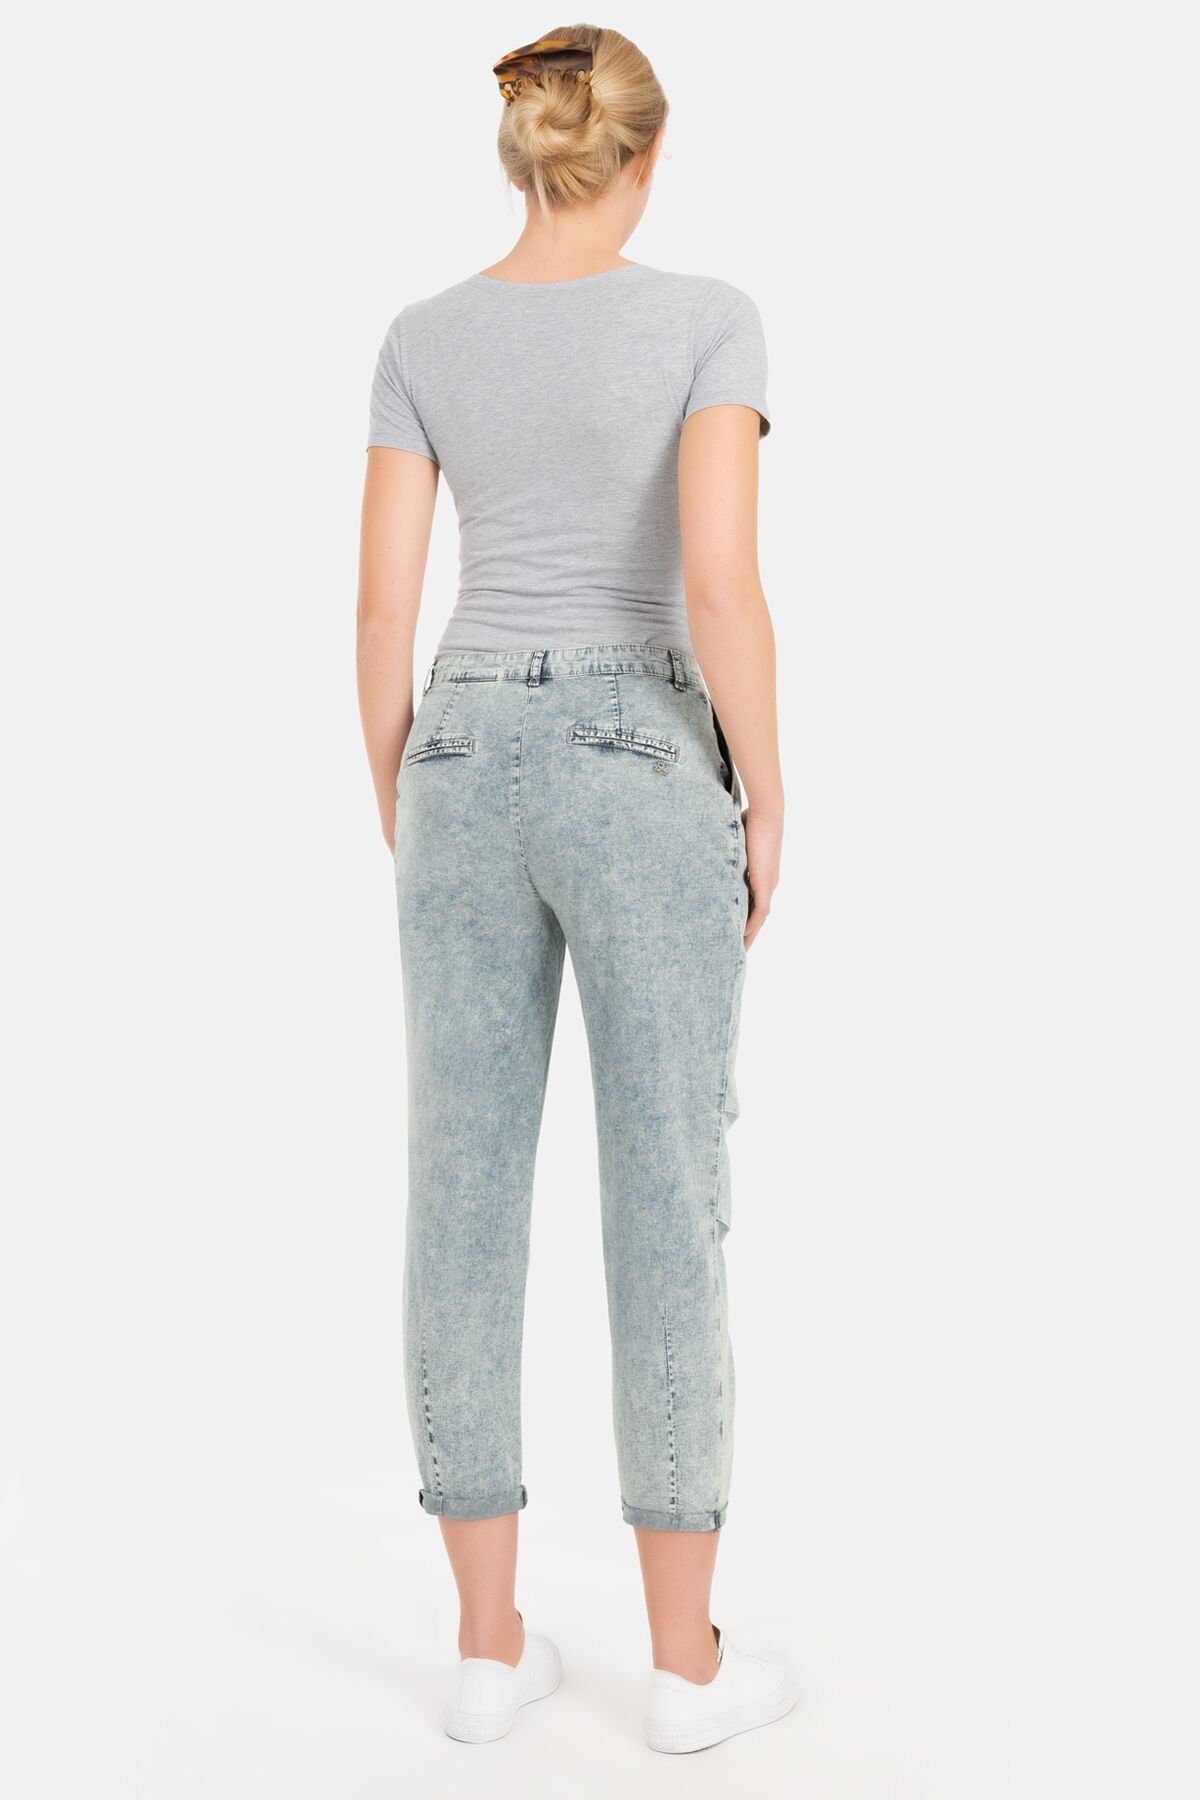 mit SKY Recover BLEACHED Relax-fit-Jeans Bonny Pants aufwendiger Effektwaschung